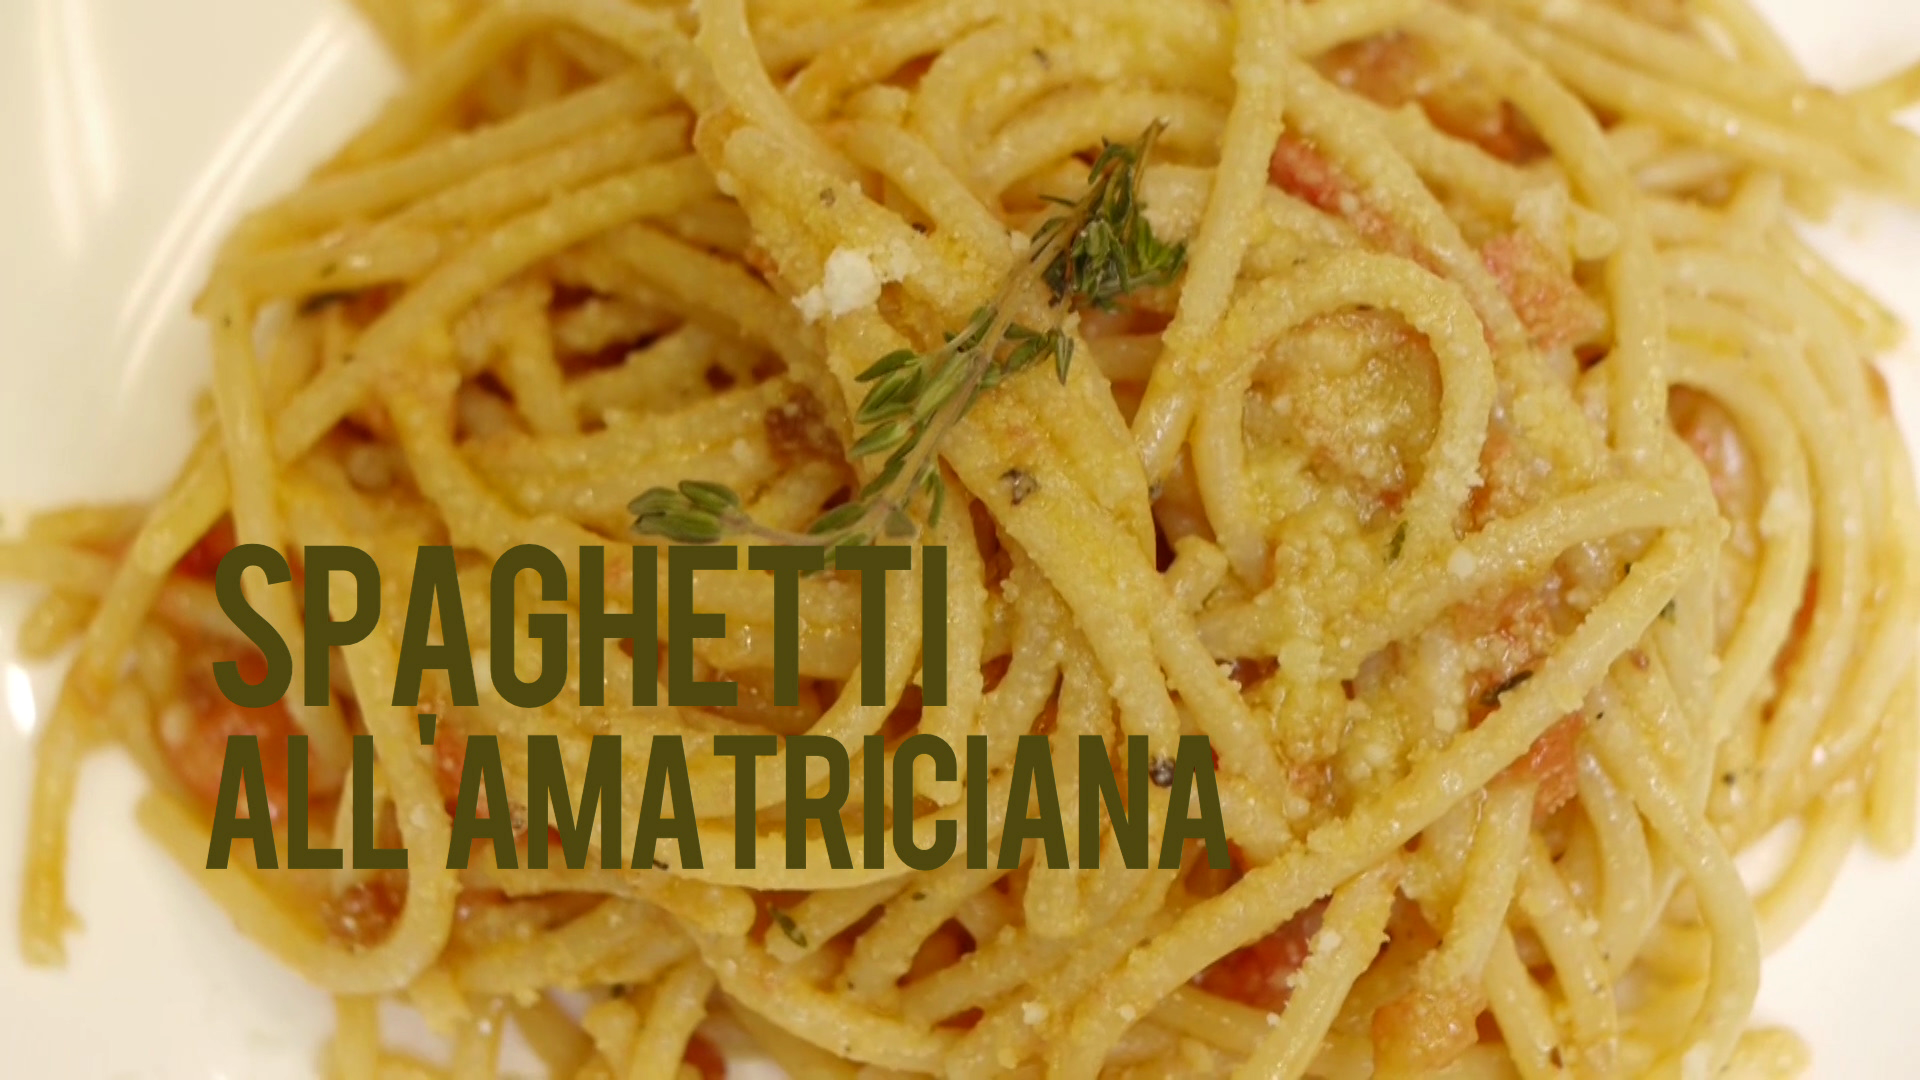 Spaghetti All’ Amatriciana